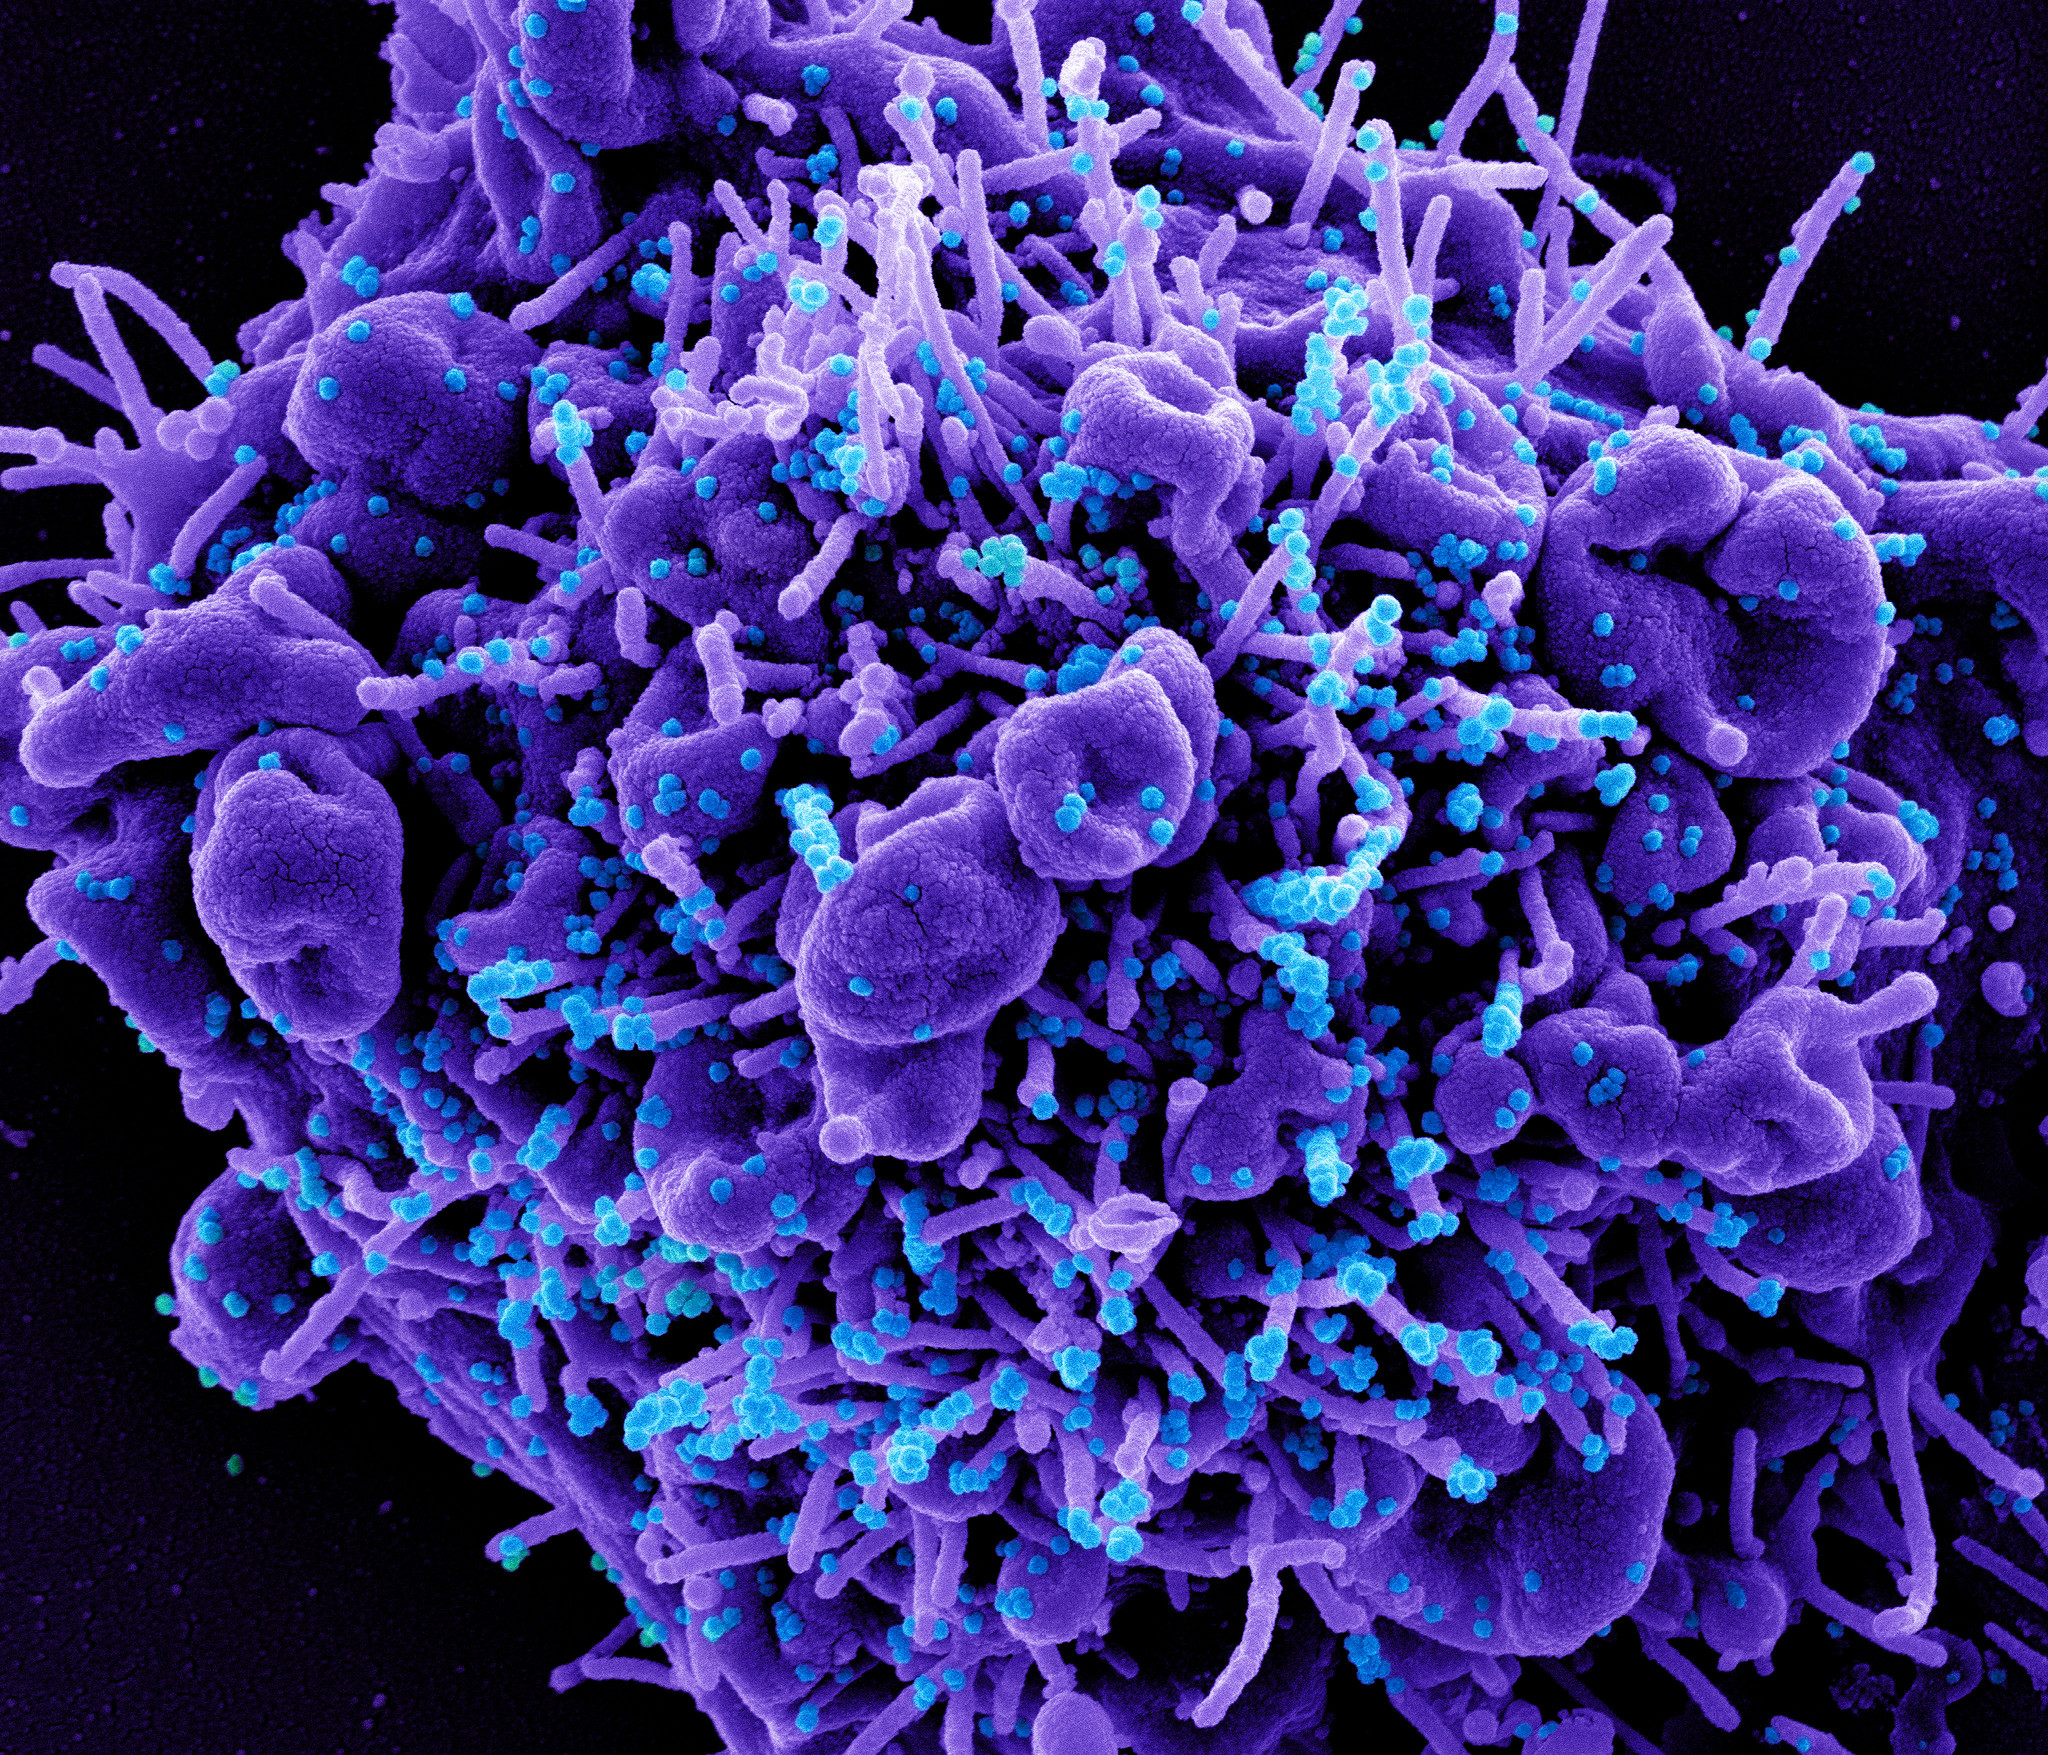 Image of the novel coronavirus, SARS-CoV-2